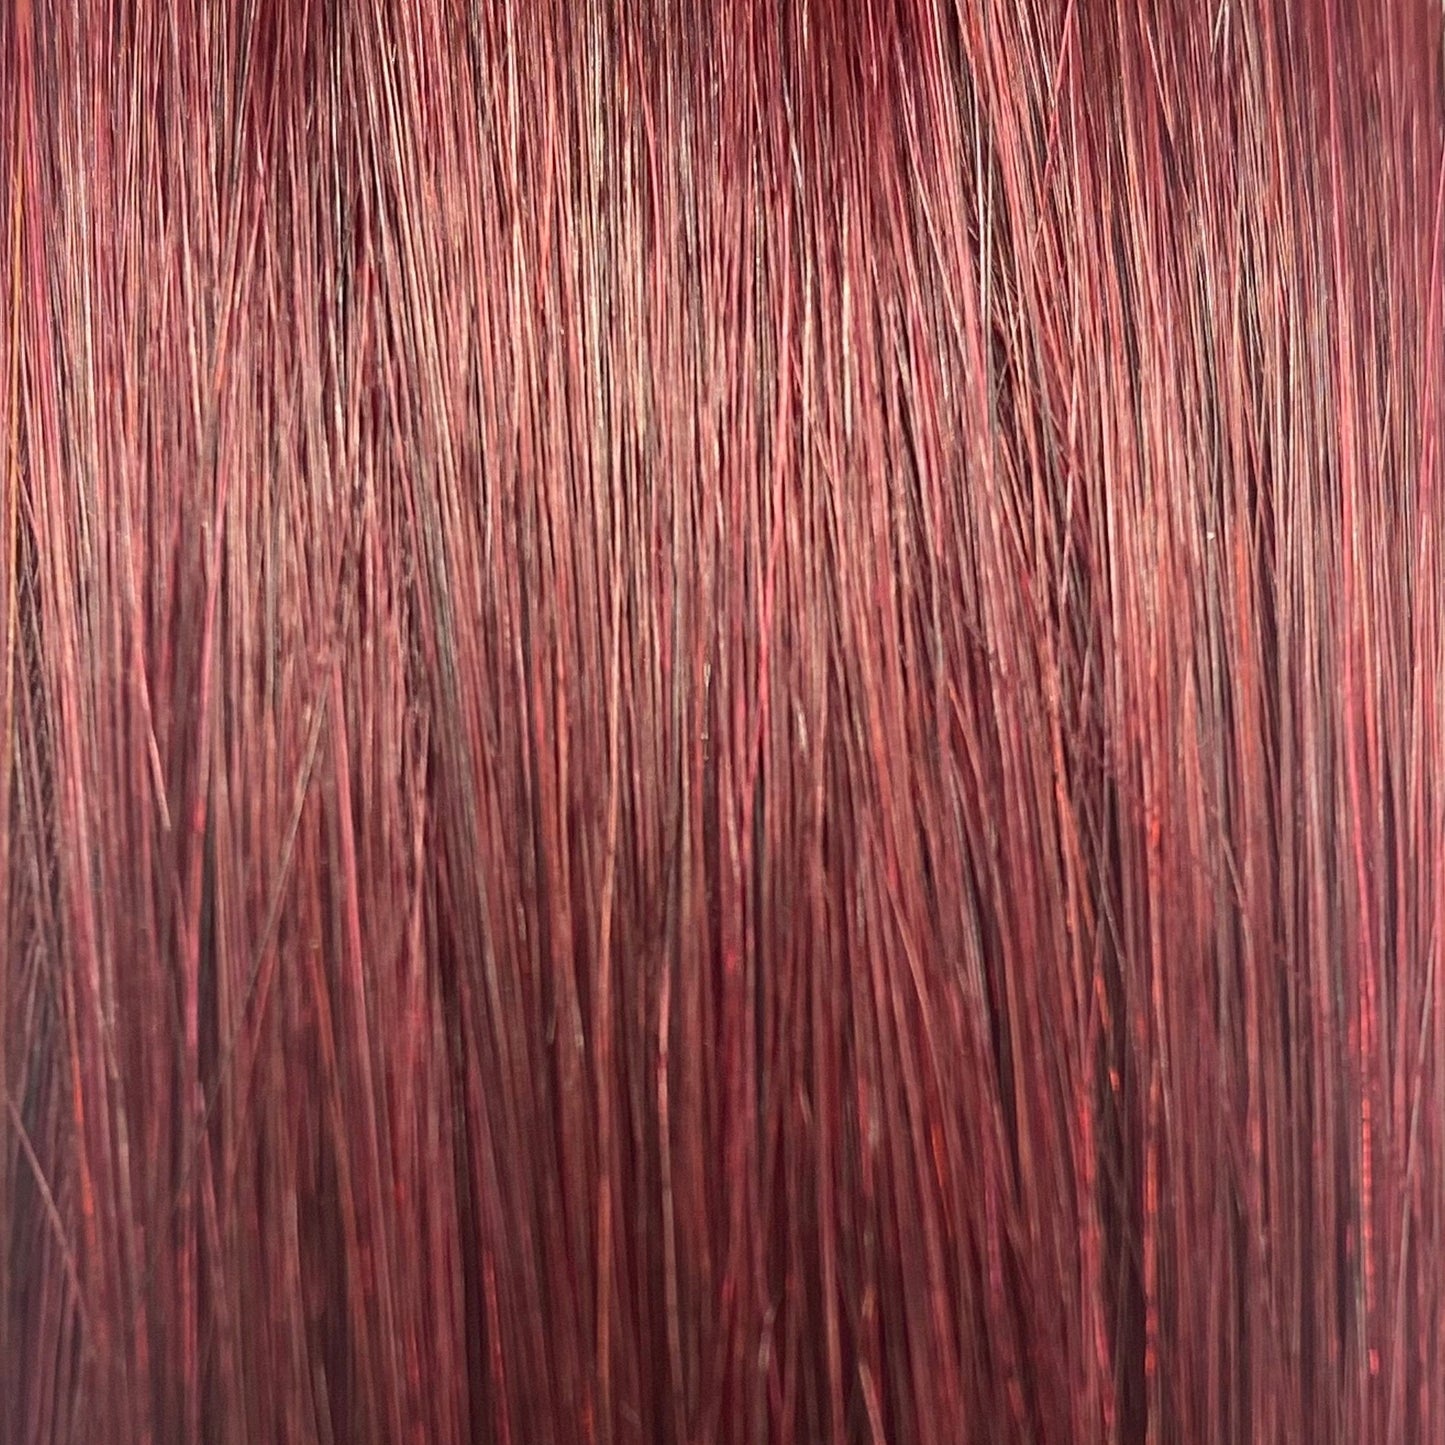 Fusion hair extensions #530 - 50cm/20 inches - Deep Dark Red Fusion Euro So Cap 